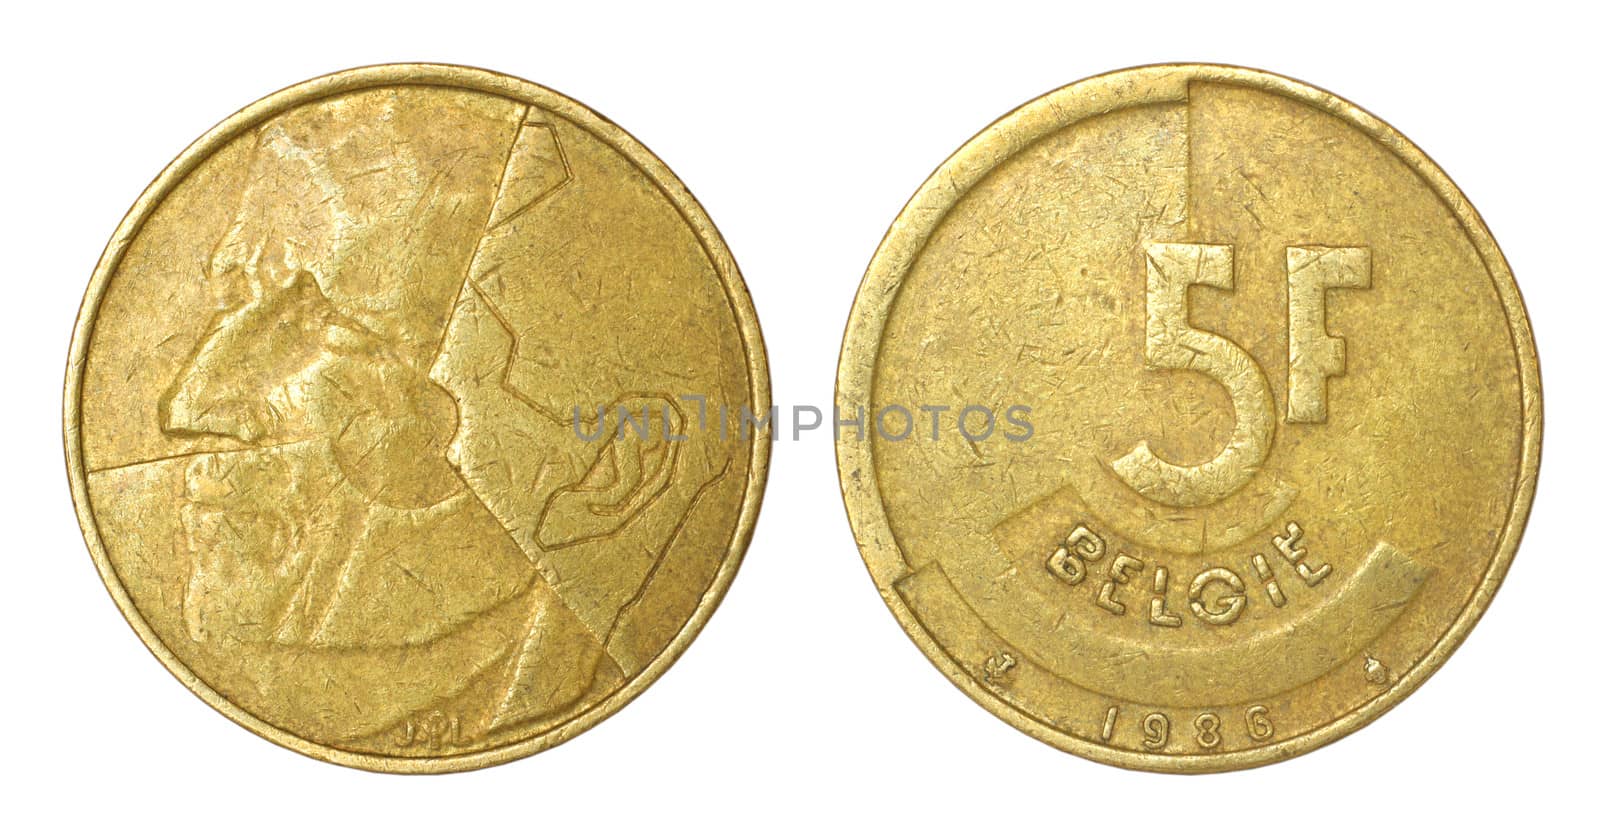 rare retro coin of belgium isolated on white background